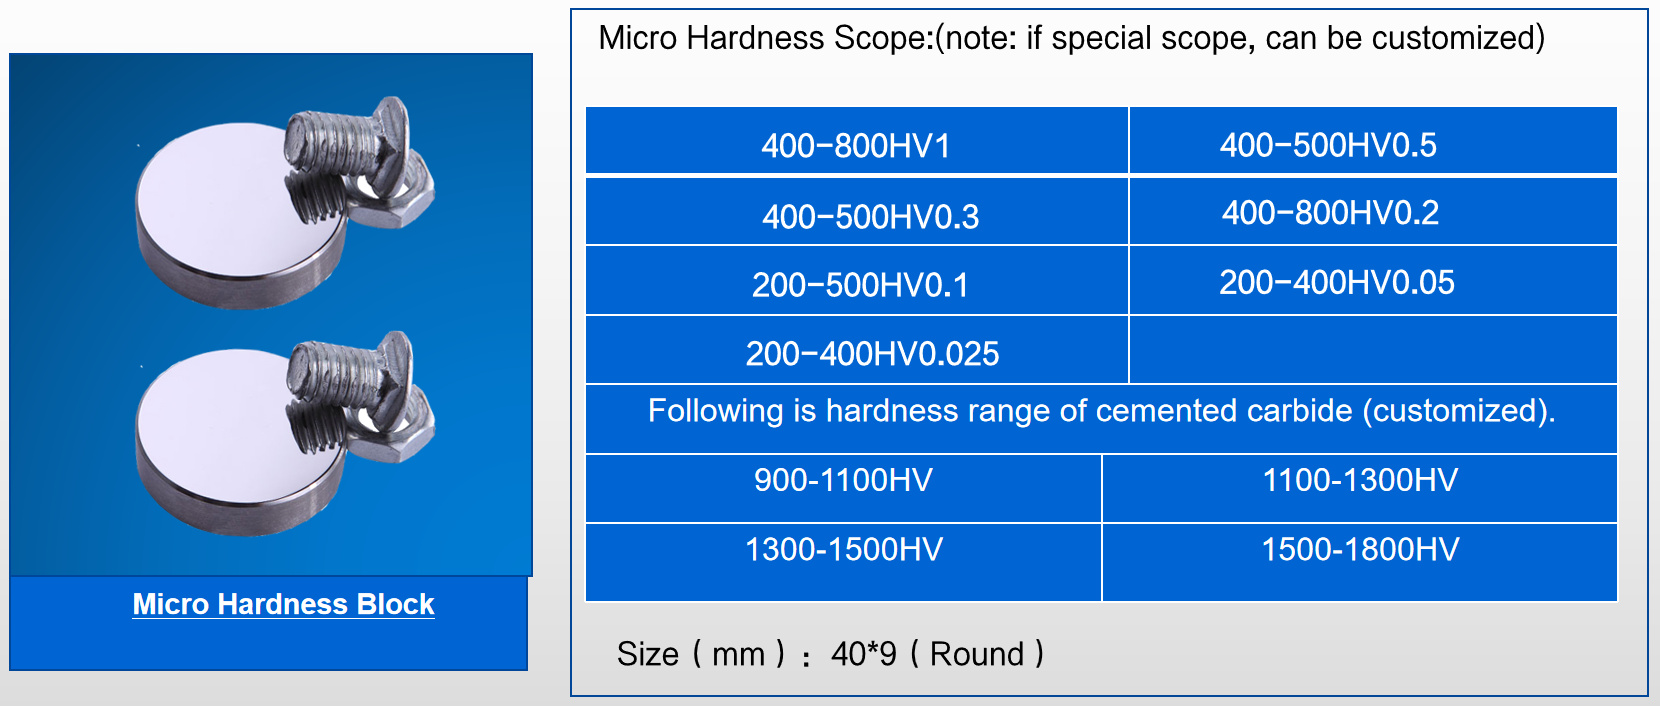 Micro Hardness Scope